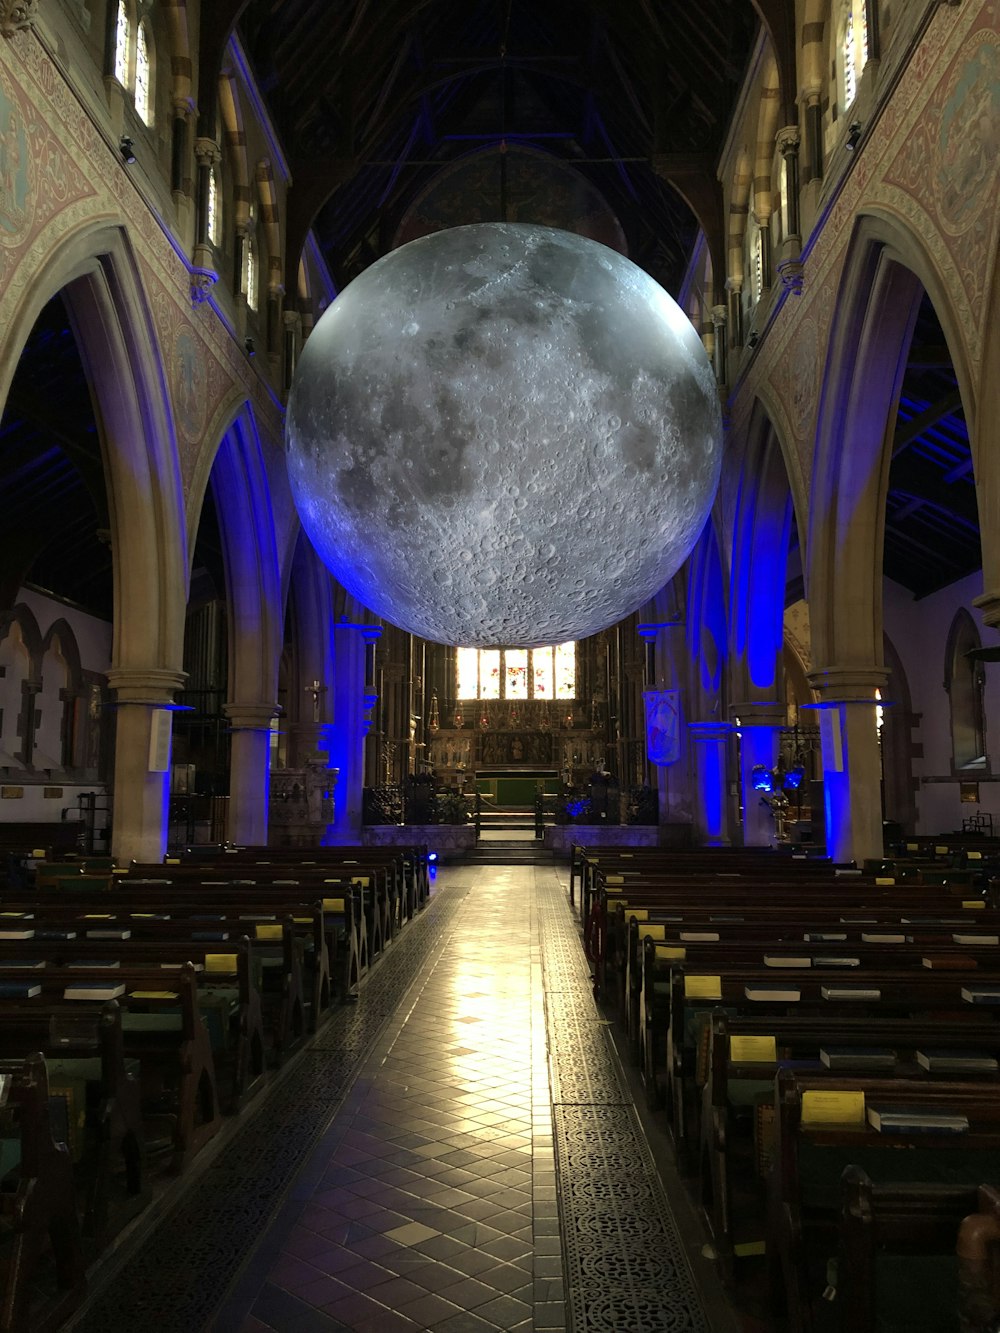 Modelo de luna dentro de una iglesia